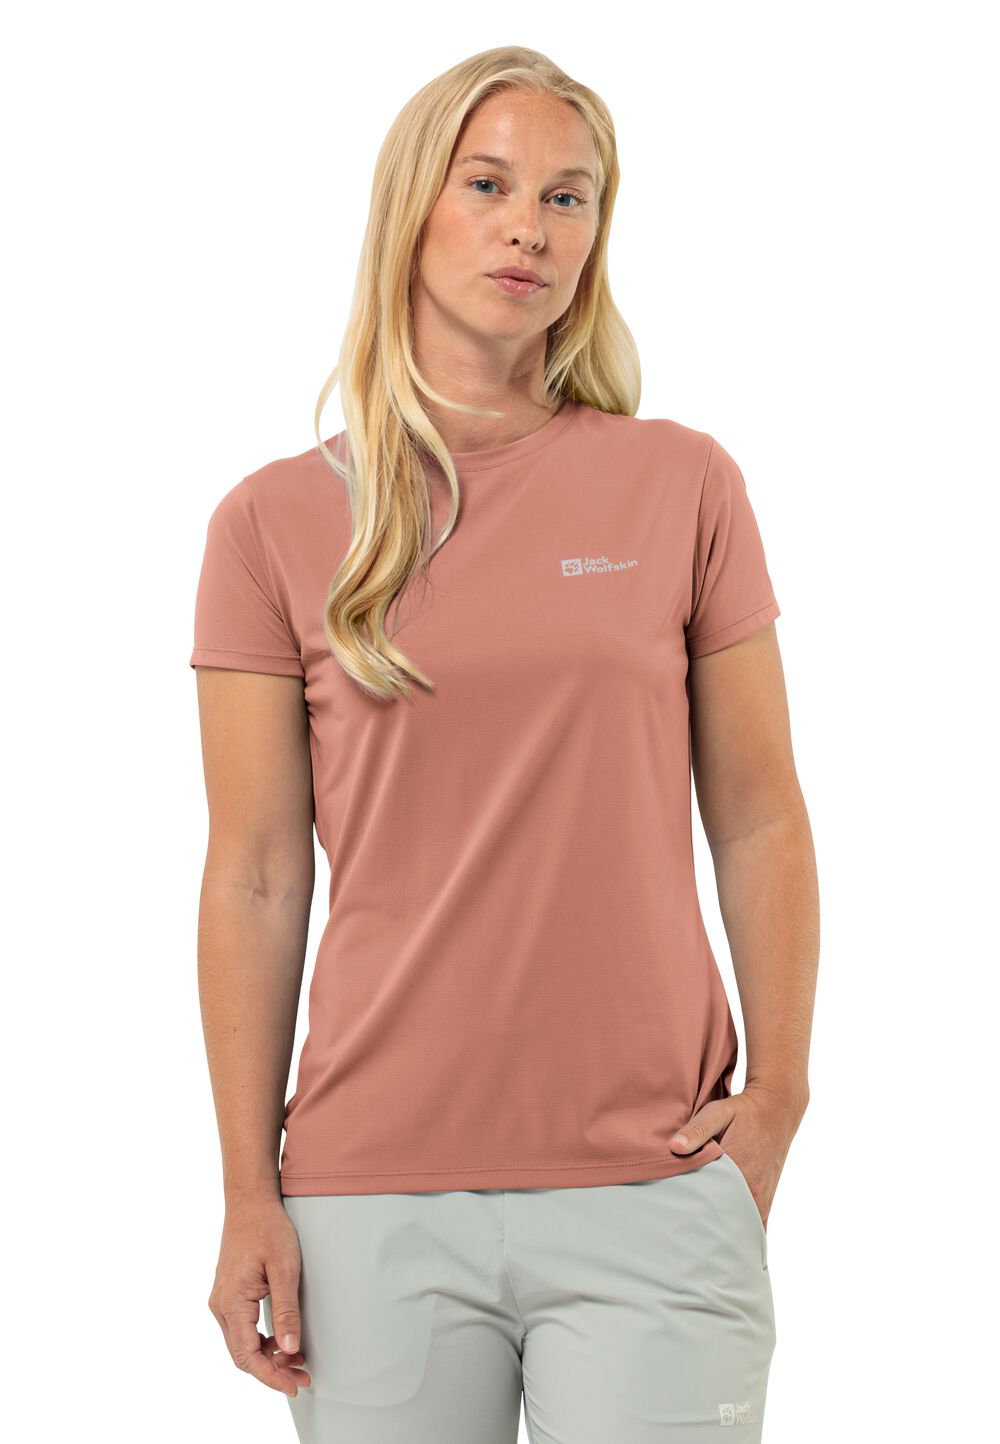 Jack Wolfskin Prelight Trail T-Shirt Women Functioneel shirt Dames XS bruin astro dust